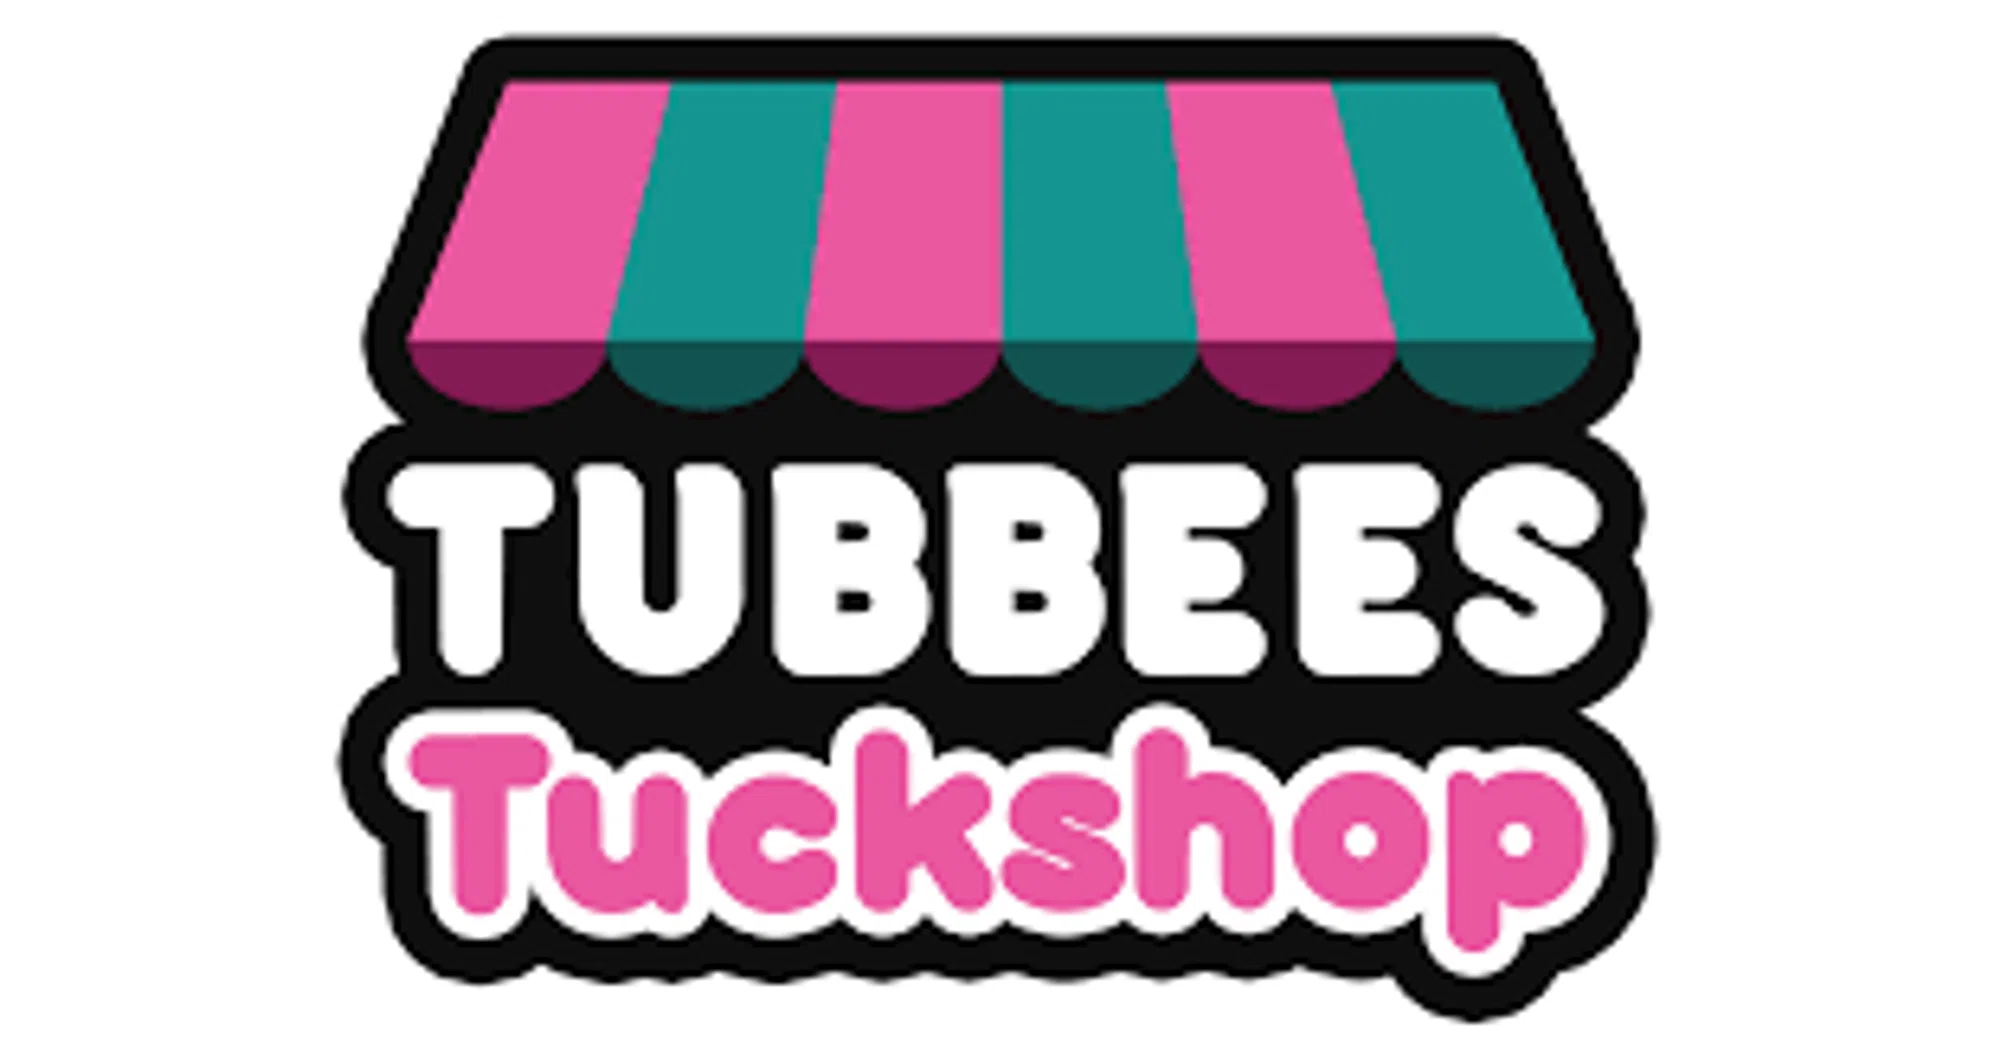 Tubbees Tuck Shop